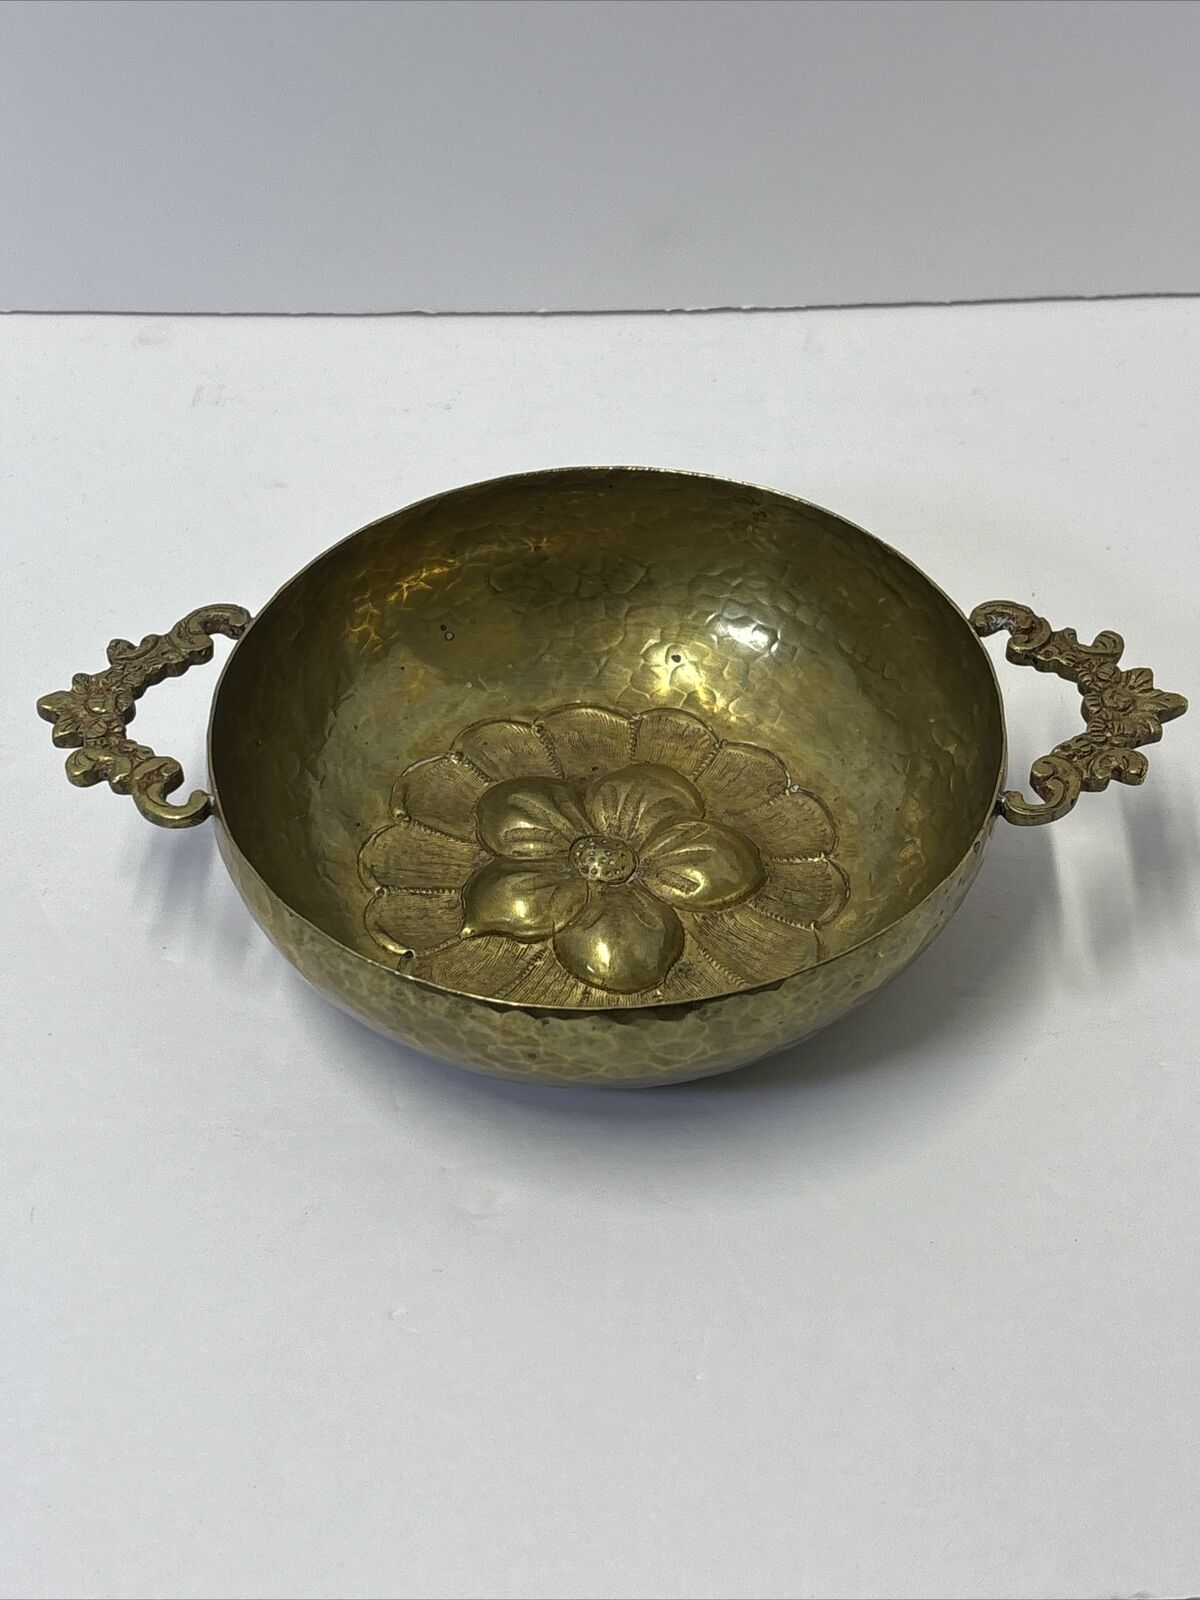 Vintage Brass Bowl with Handles Embossed Floral Pattern